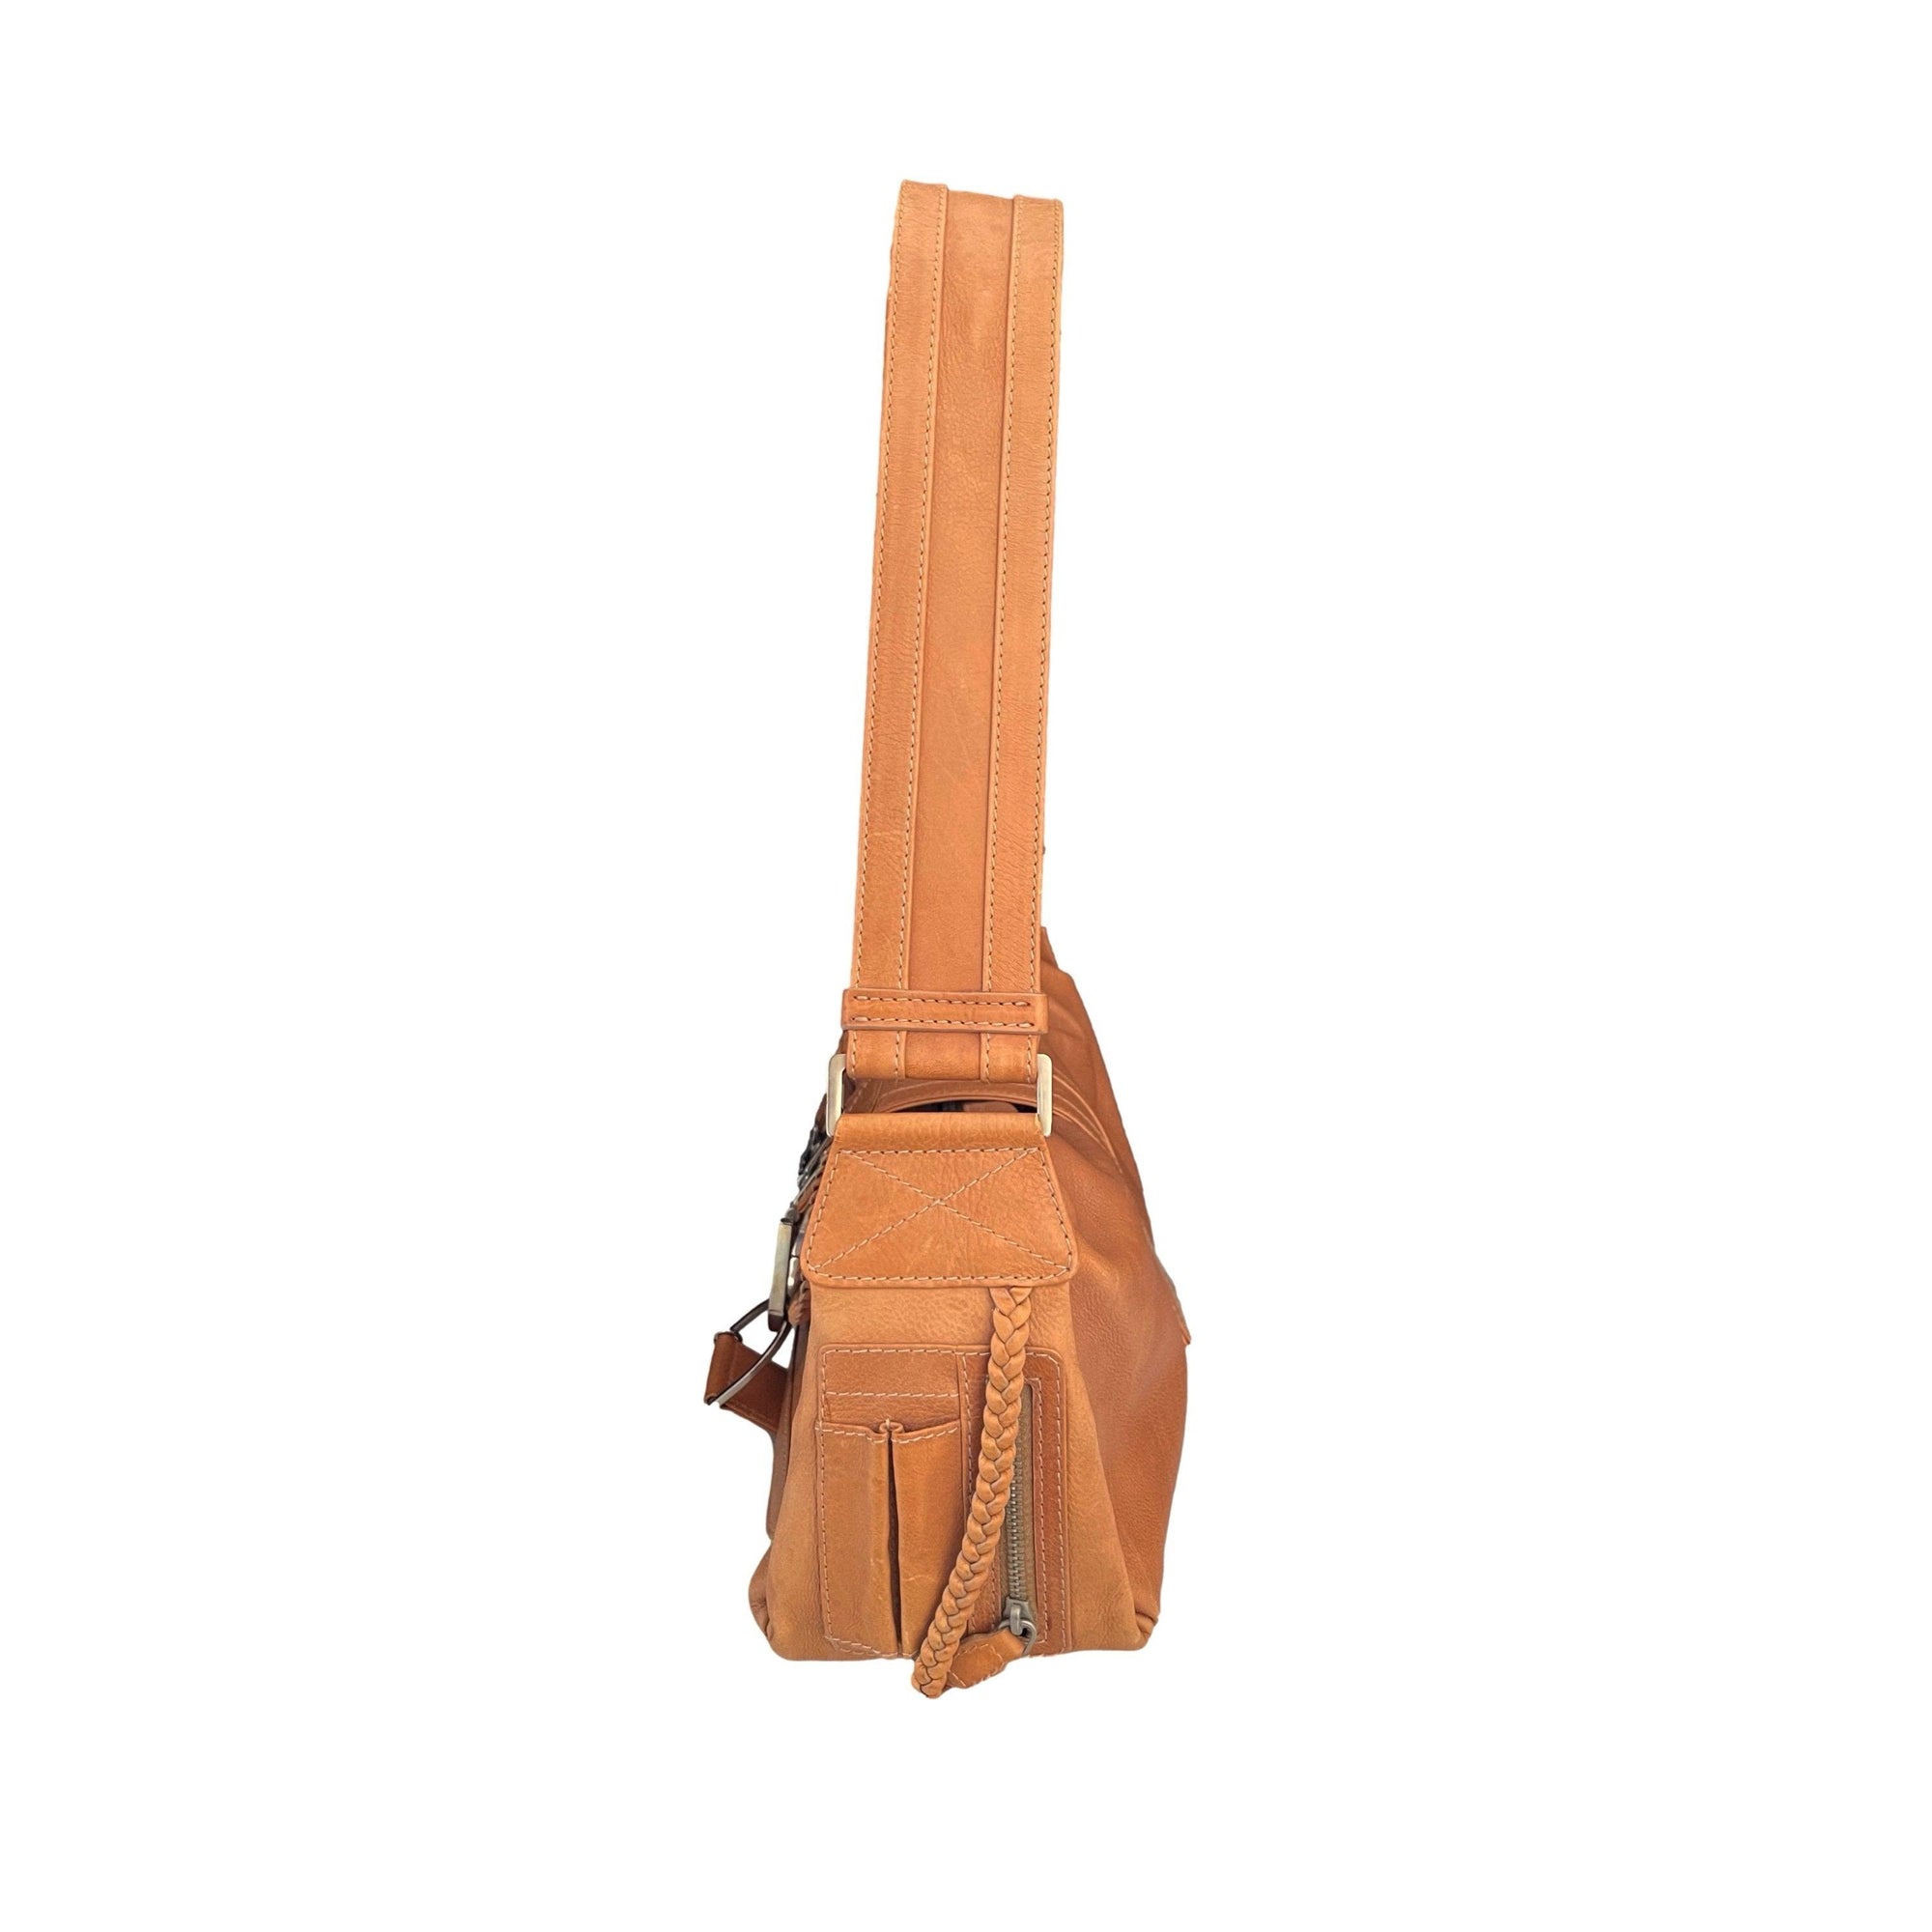 Dior Tan Leather Shoulder Bag - Handbags